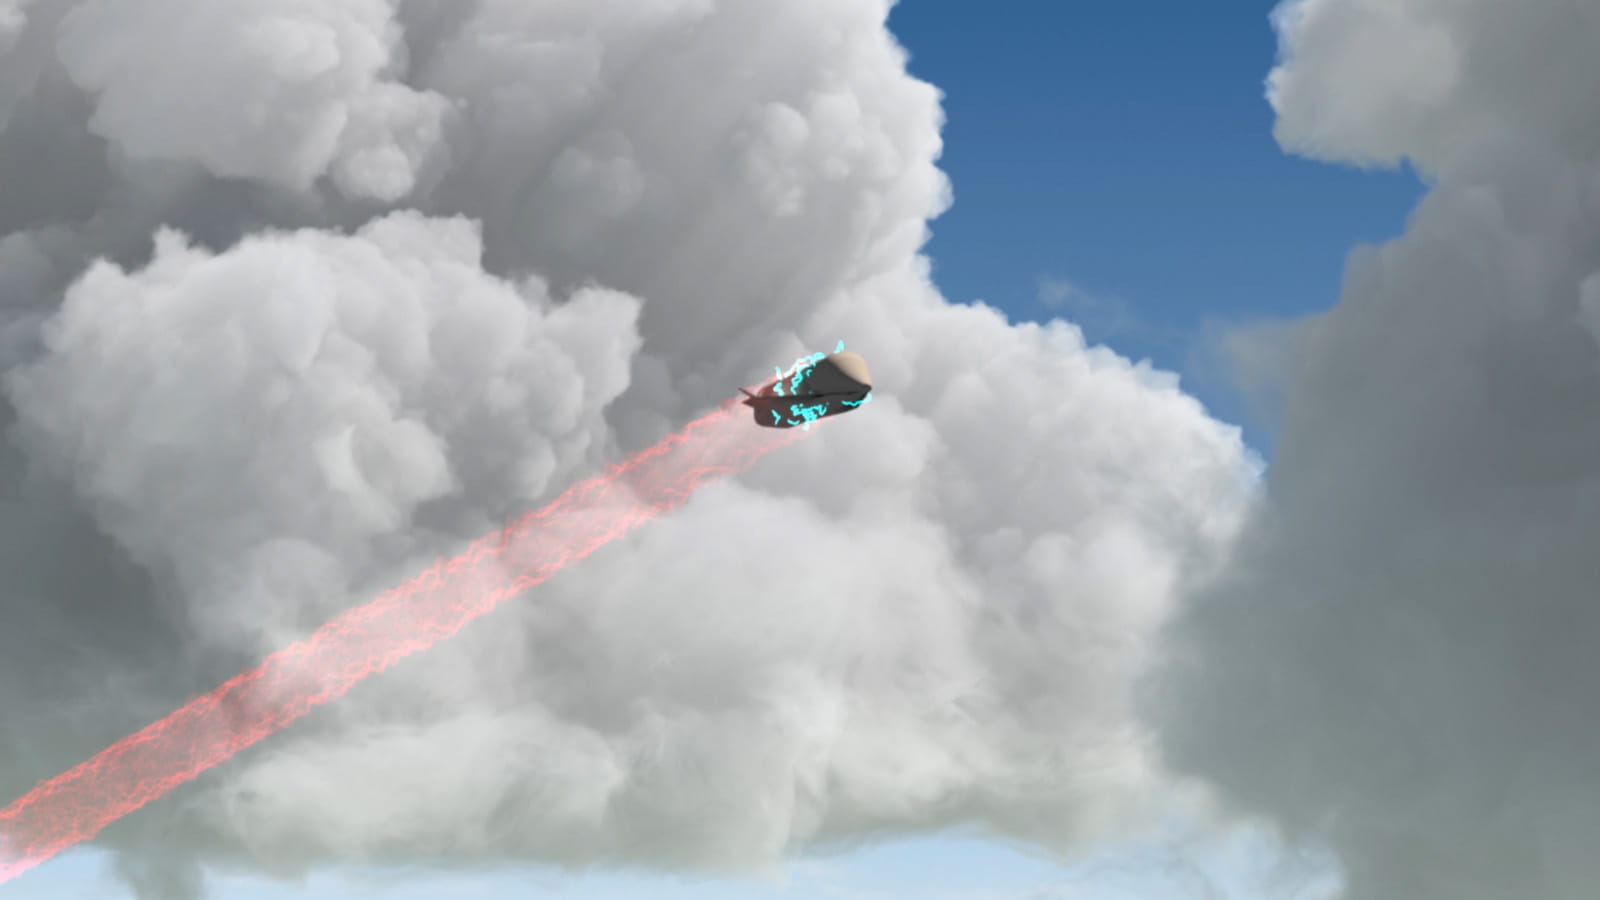 rendering of HPM beam disabling UAV